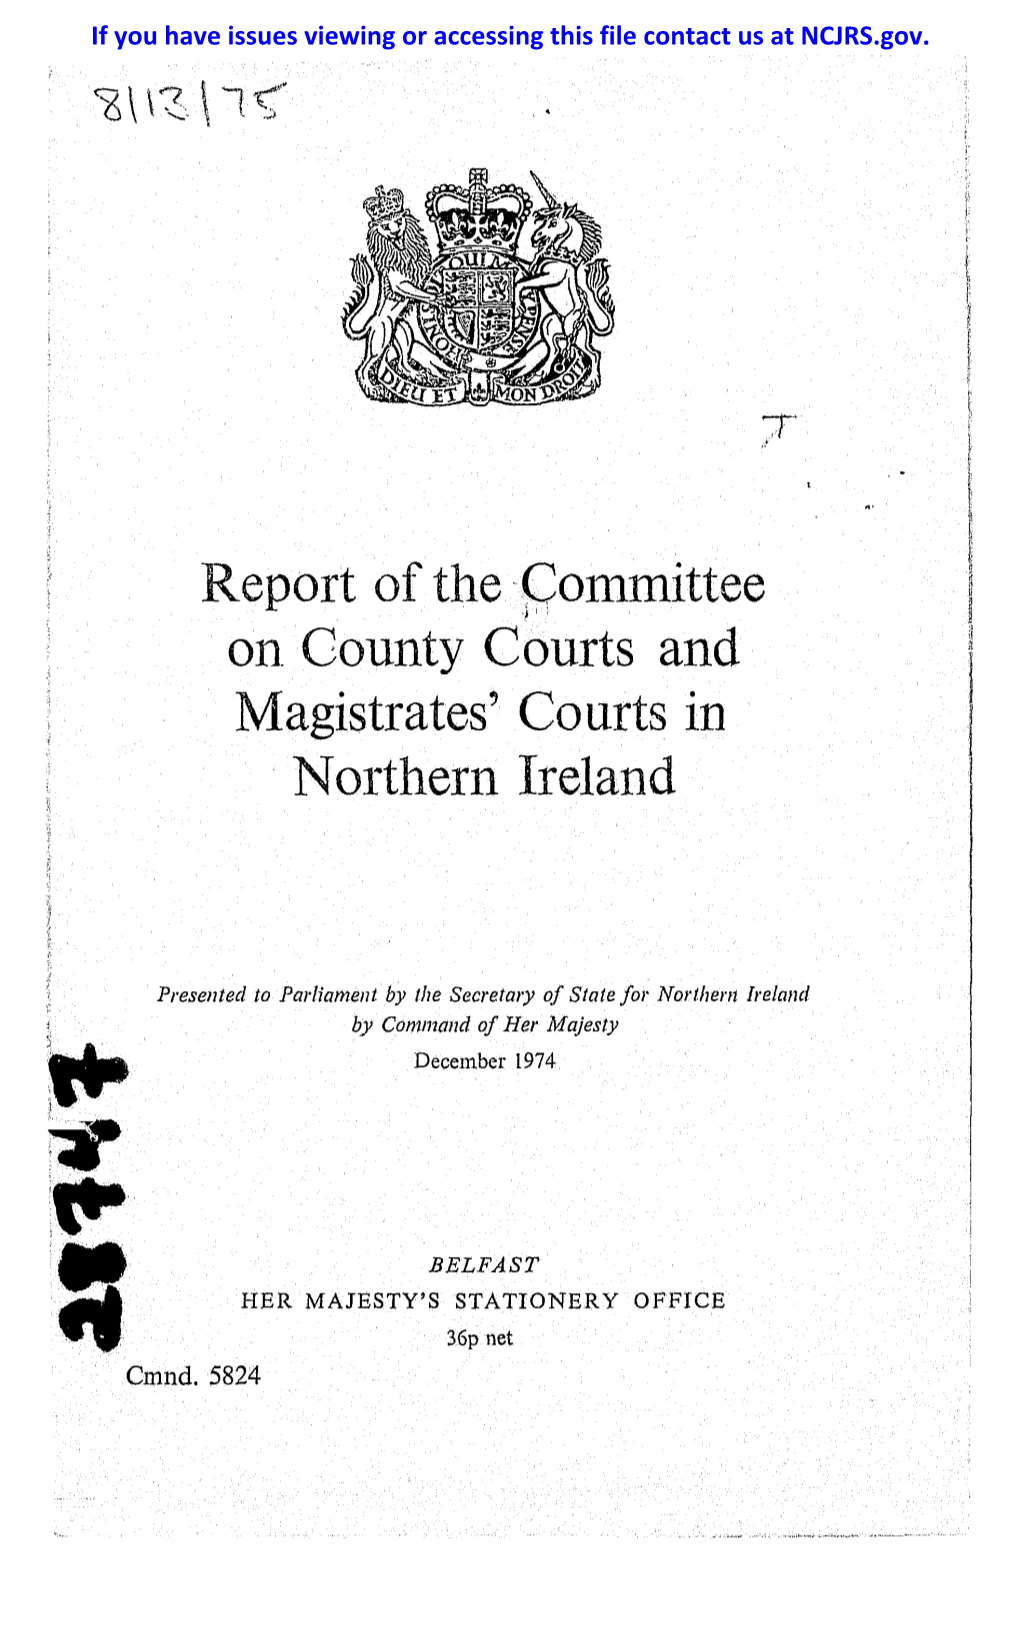 Courts in Northern Ireland